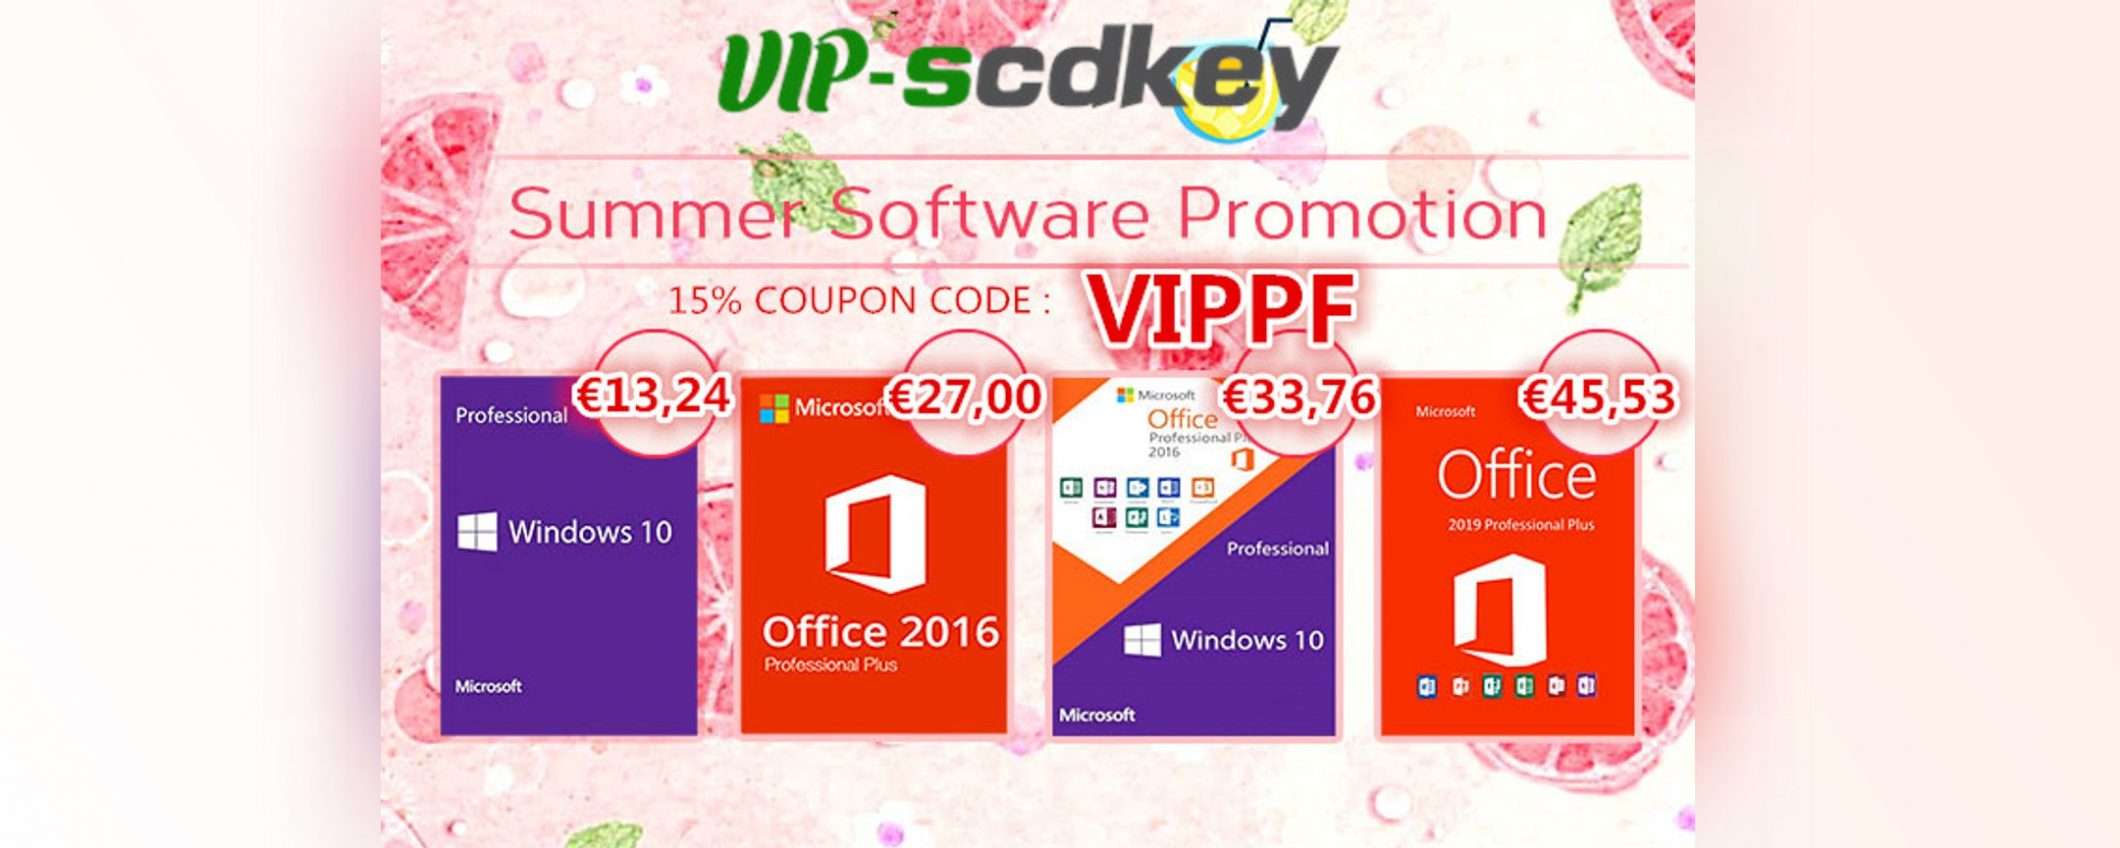 VIP-SCDkey offerte d'Estate: Windows 10 PRO €13, Office 2016 €27